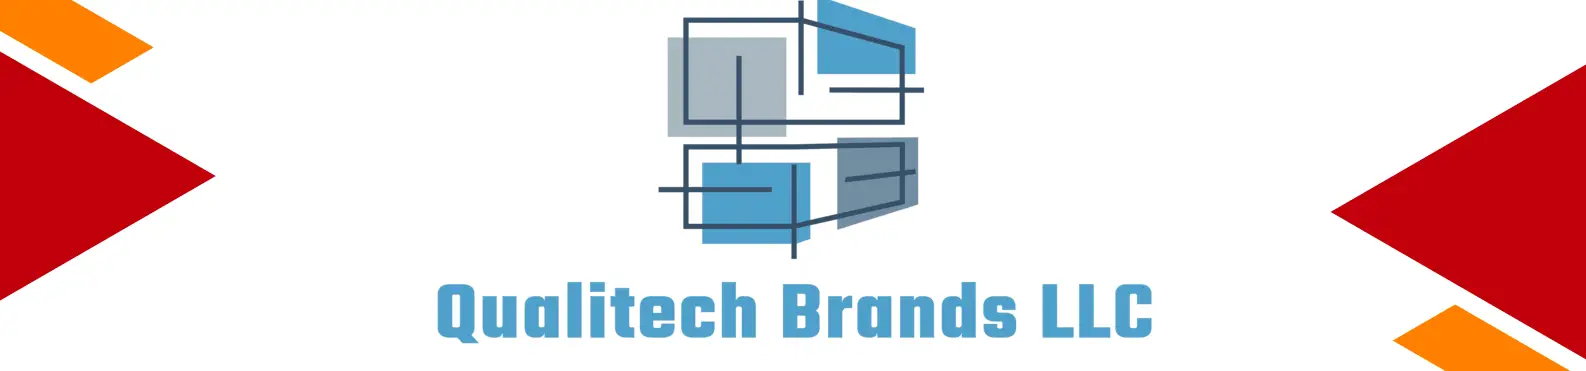 Company logo of Qualitech Brands LLC